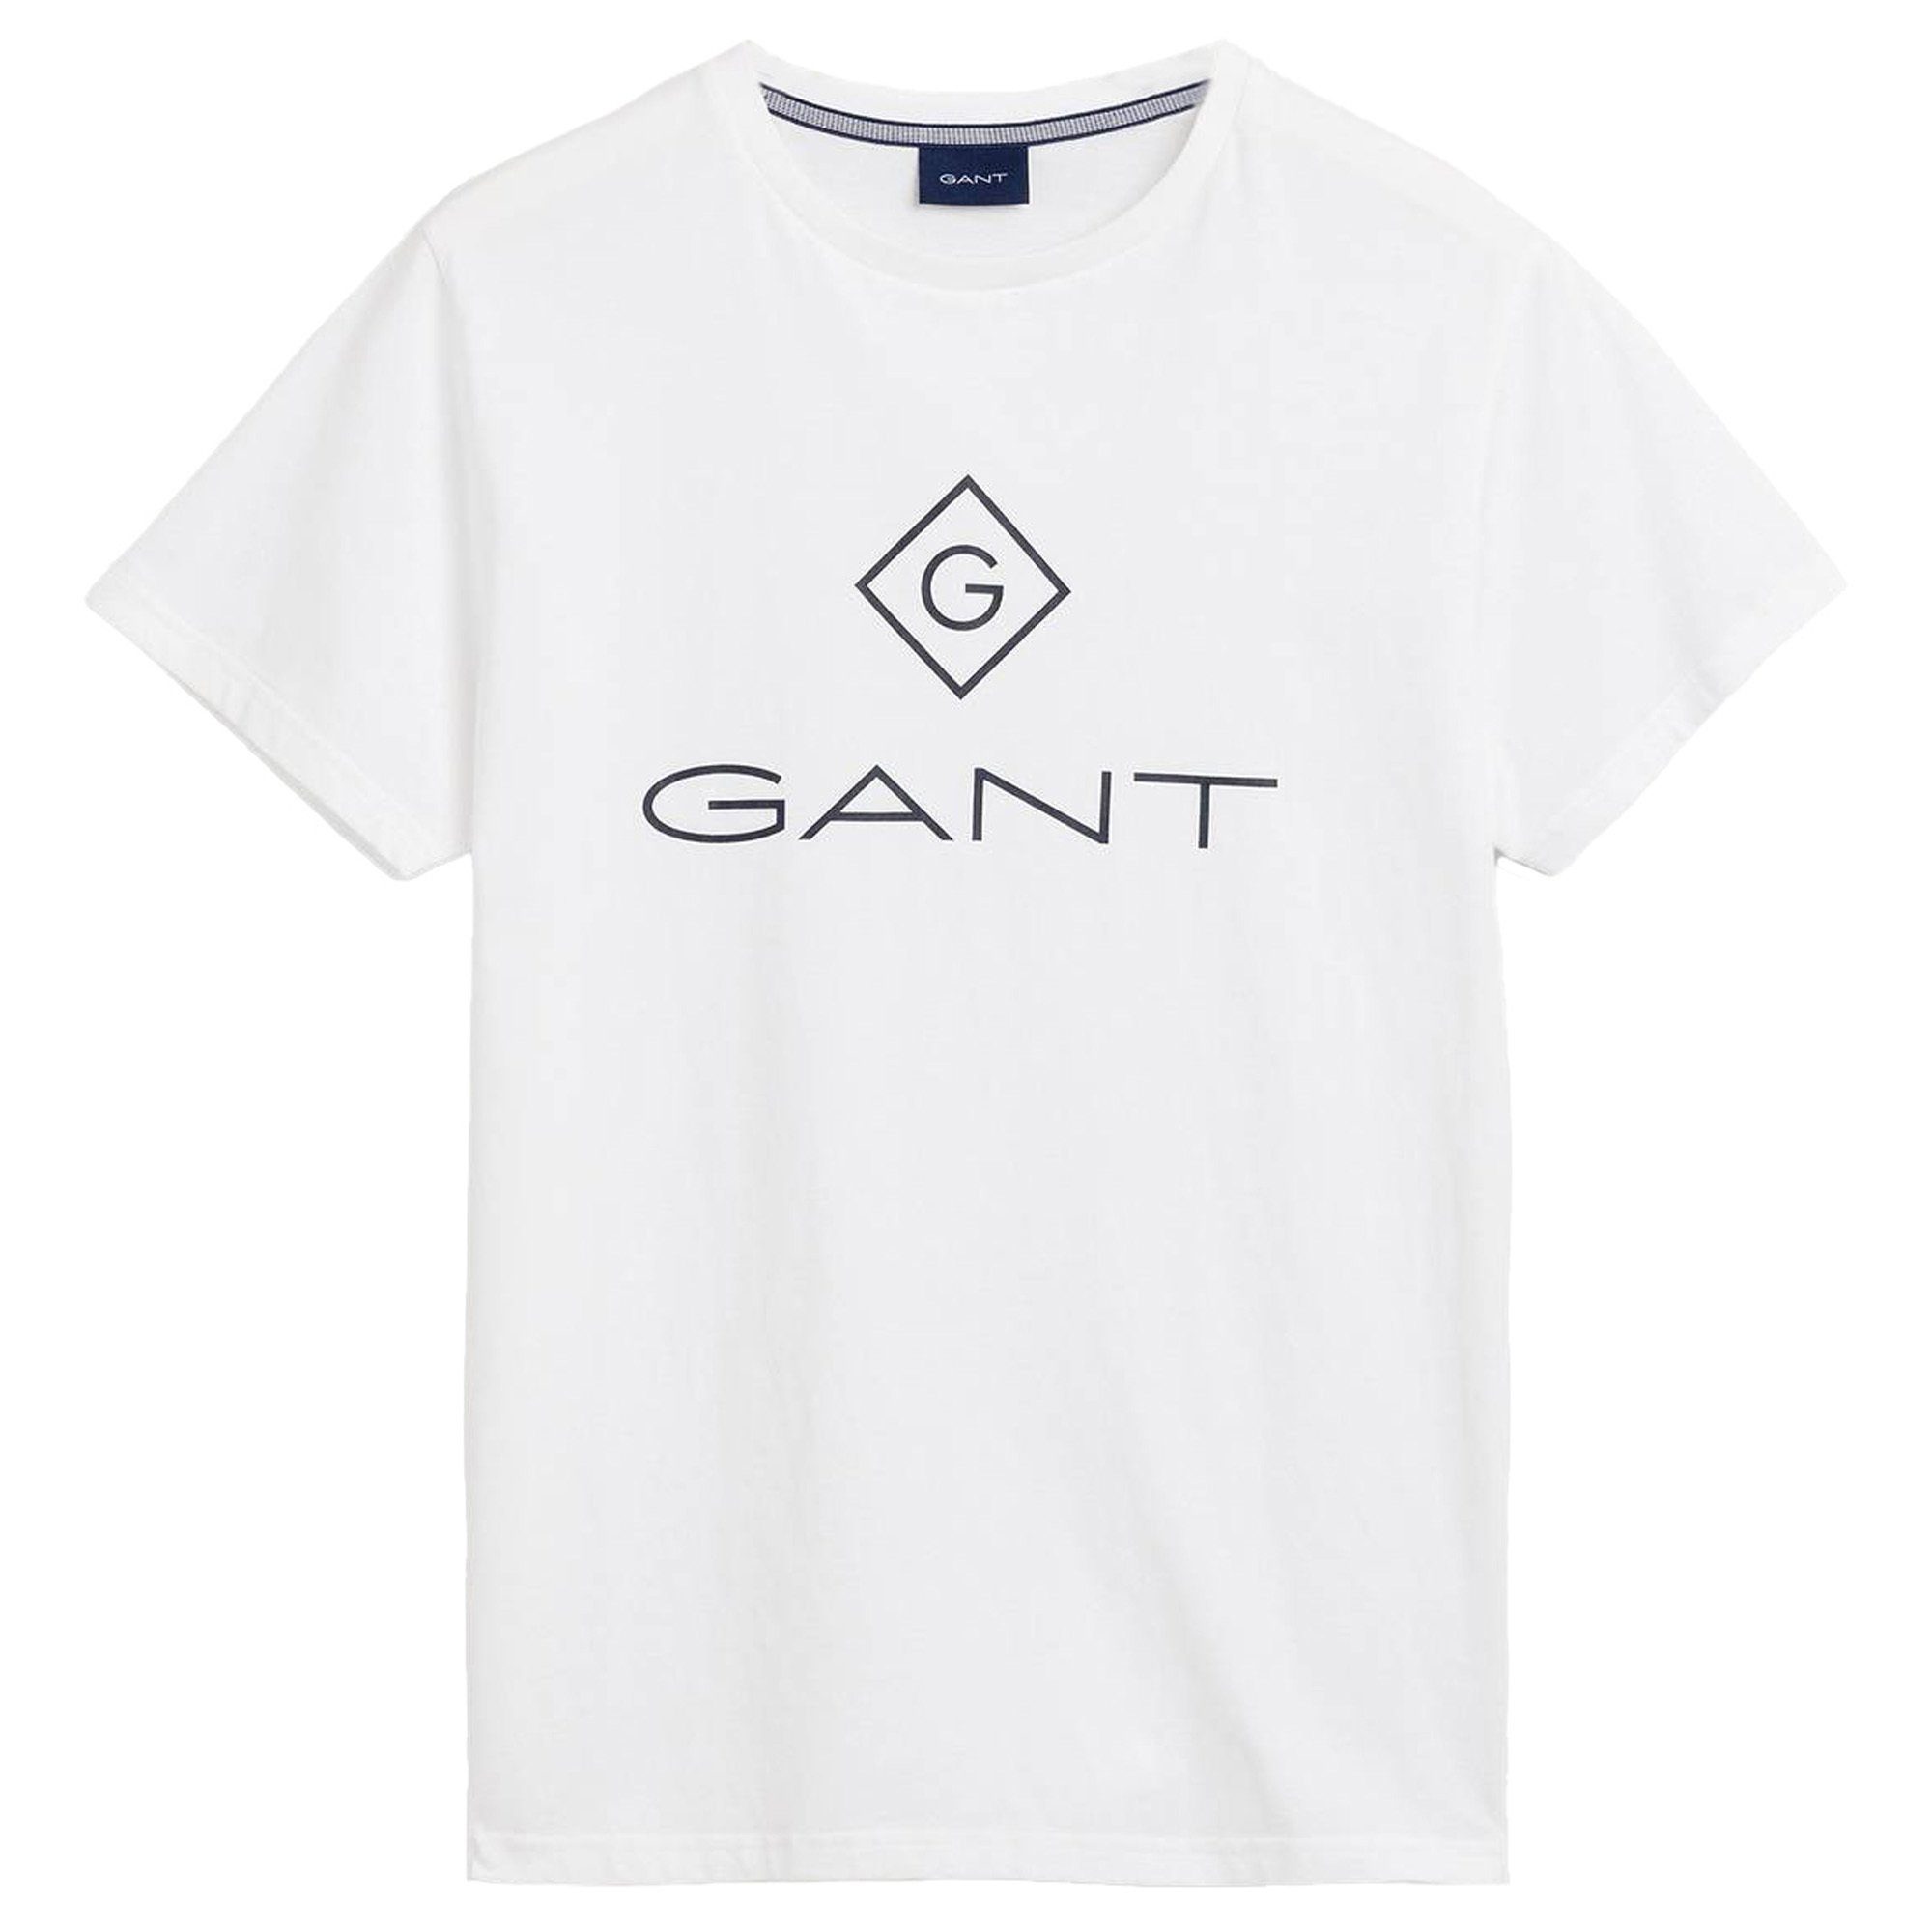 Gant T-Shirt Logo, Herren Weiß - Lock T-Shirt, T-Shirt einfarbig Up